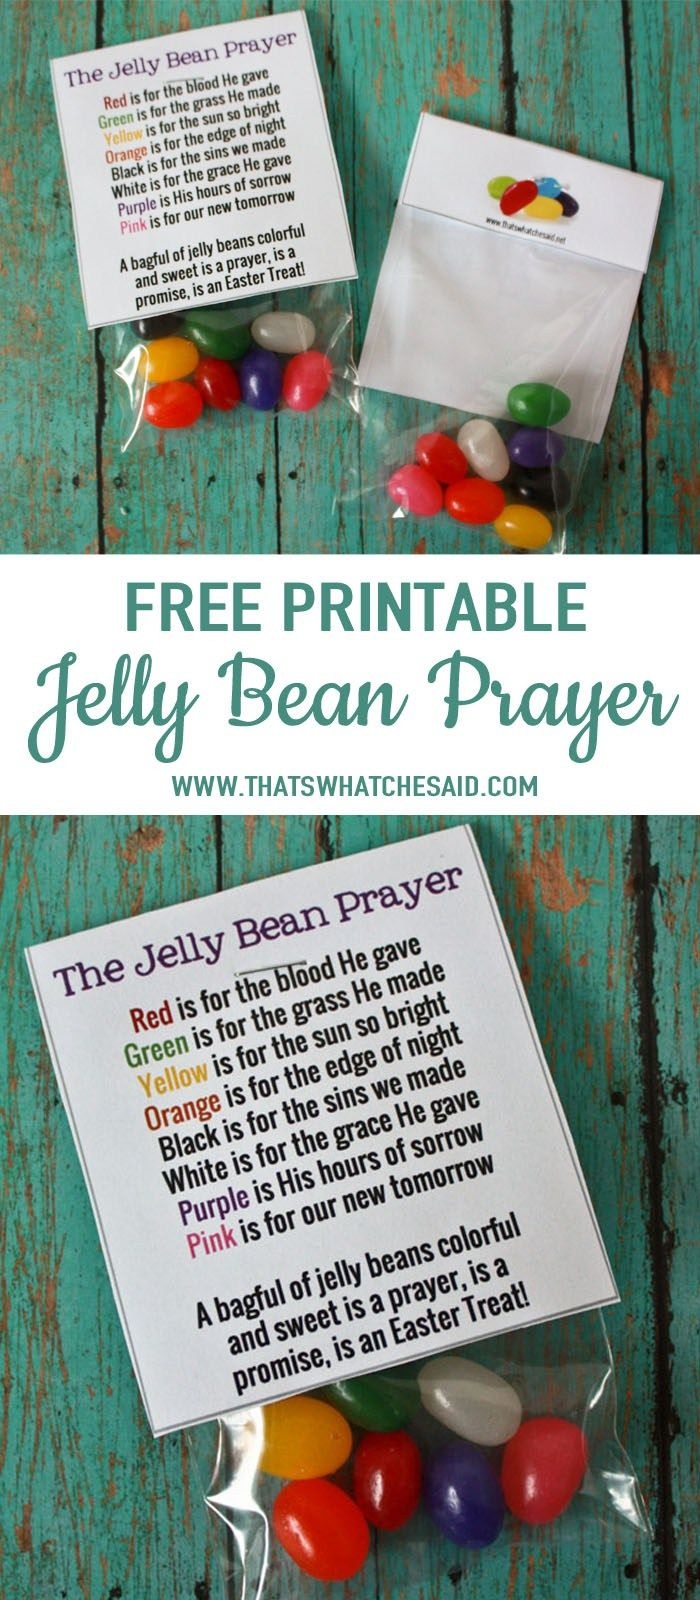 Jelly Bean Prayer Free Printable | As Seen On Thatswhatchesaid - Free Printable Easter Sermons